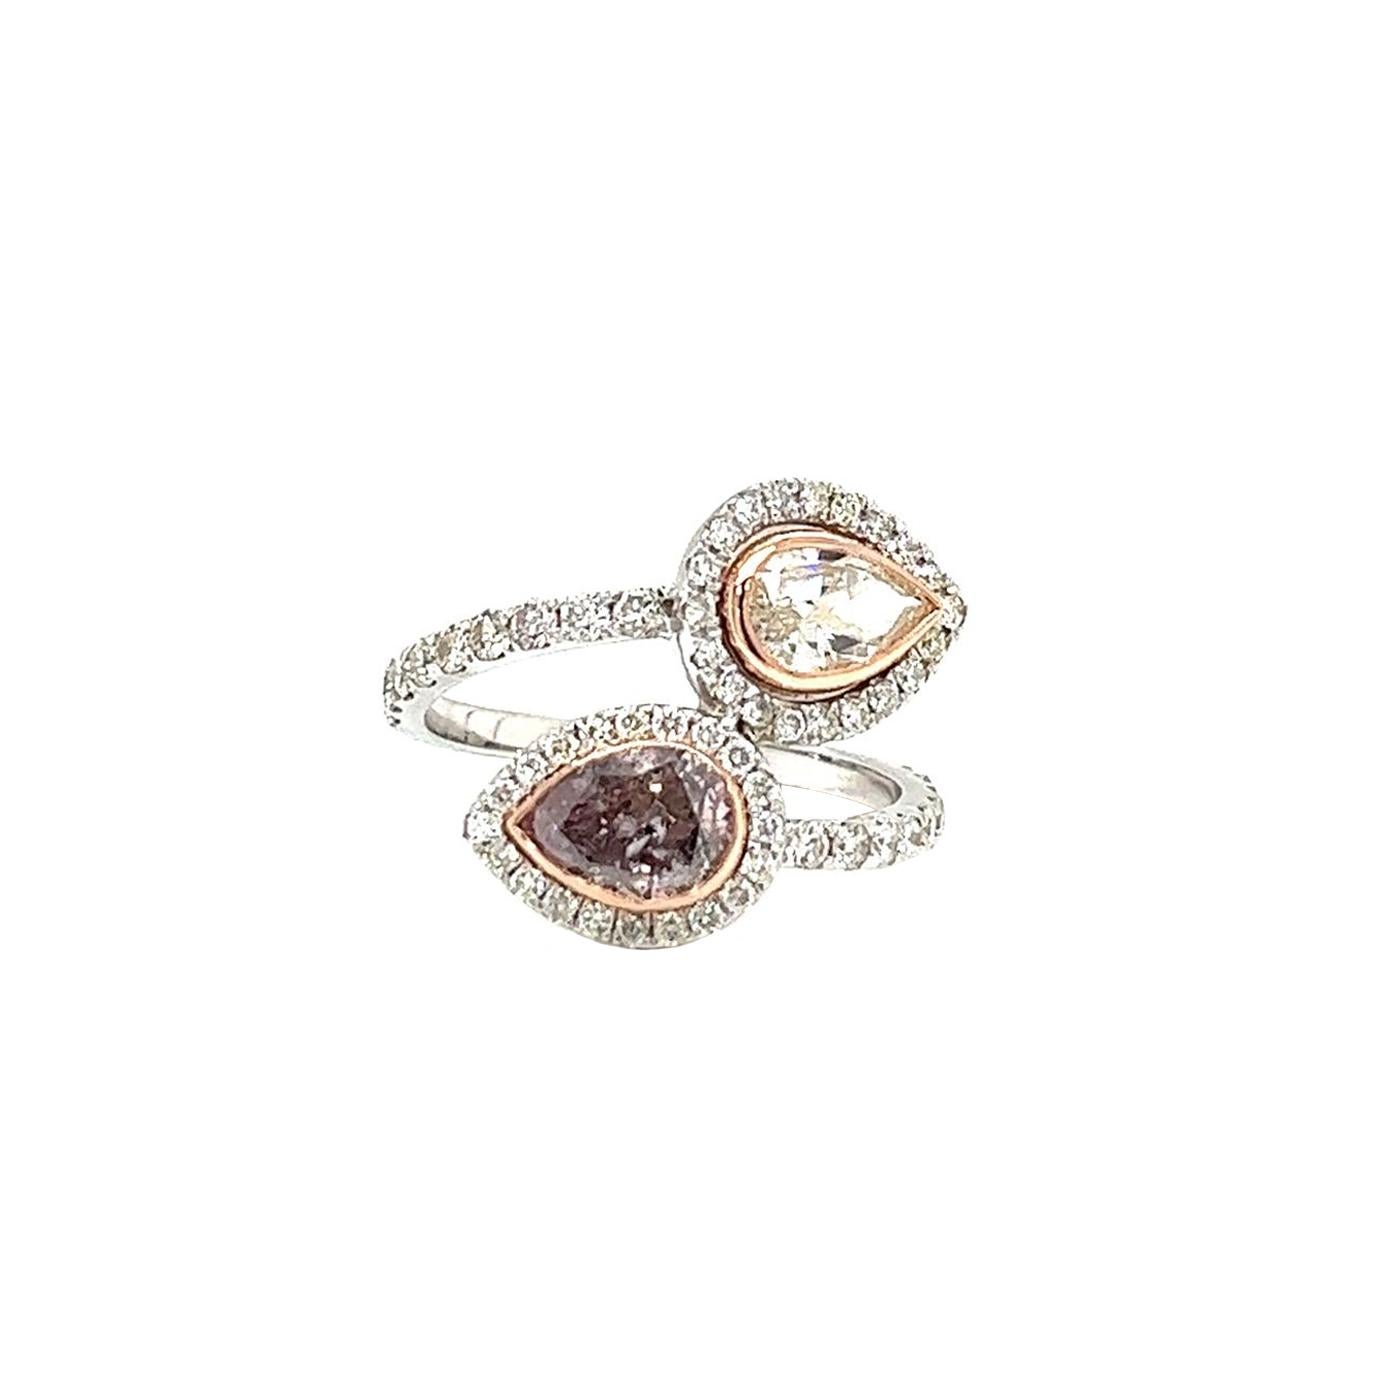 Modernist GIA 1.01ct Natural Fancy Purpleish pink Diamond Ring w/1.01ct Pear Shape Diamond